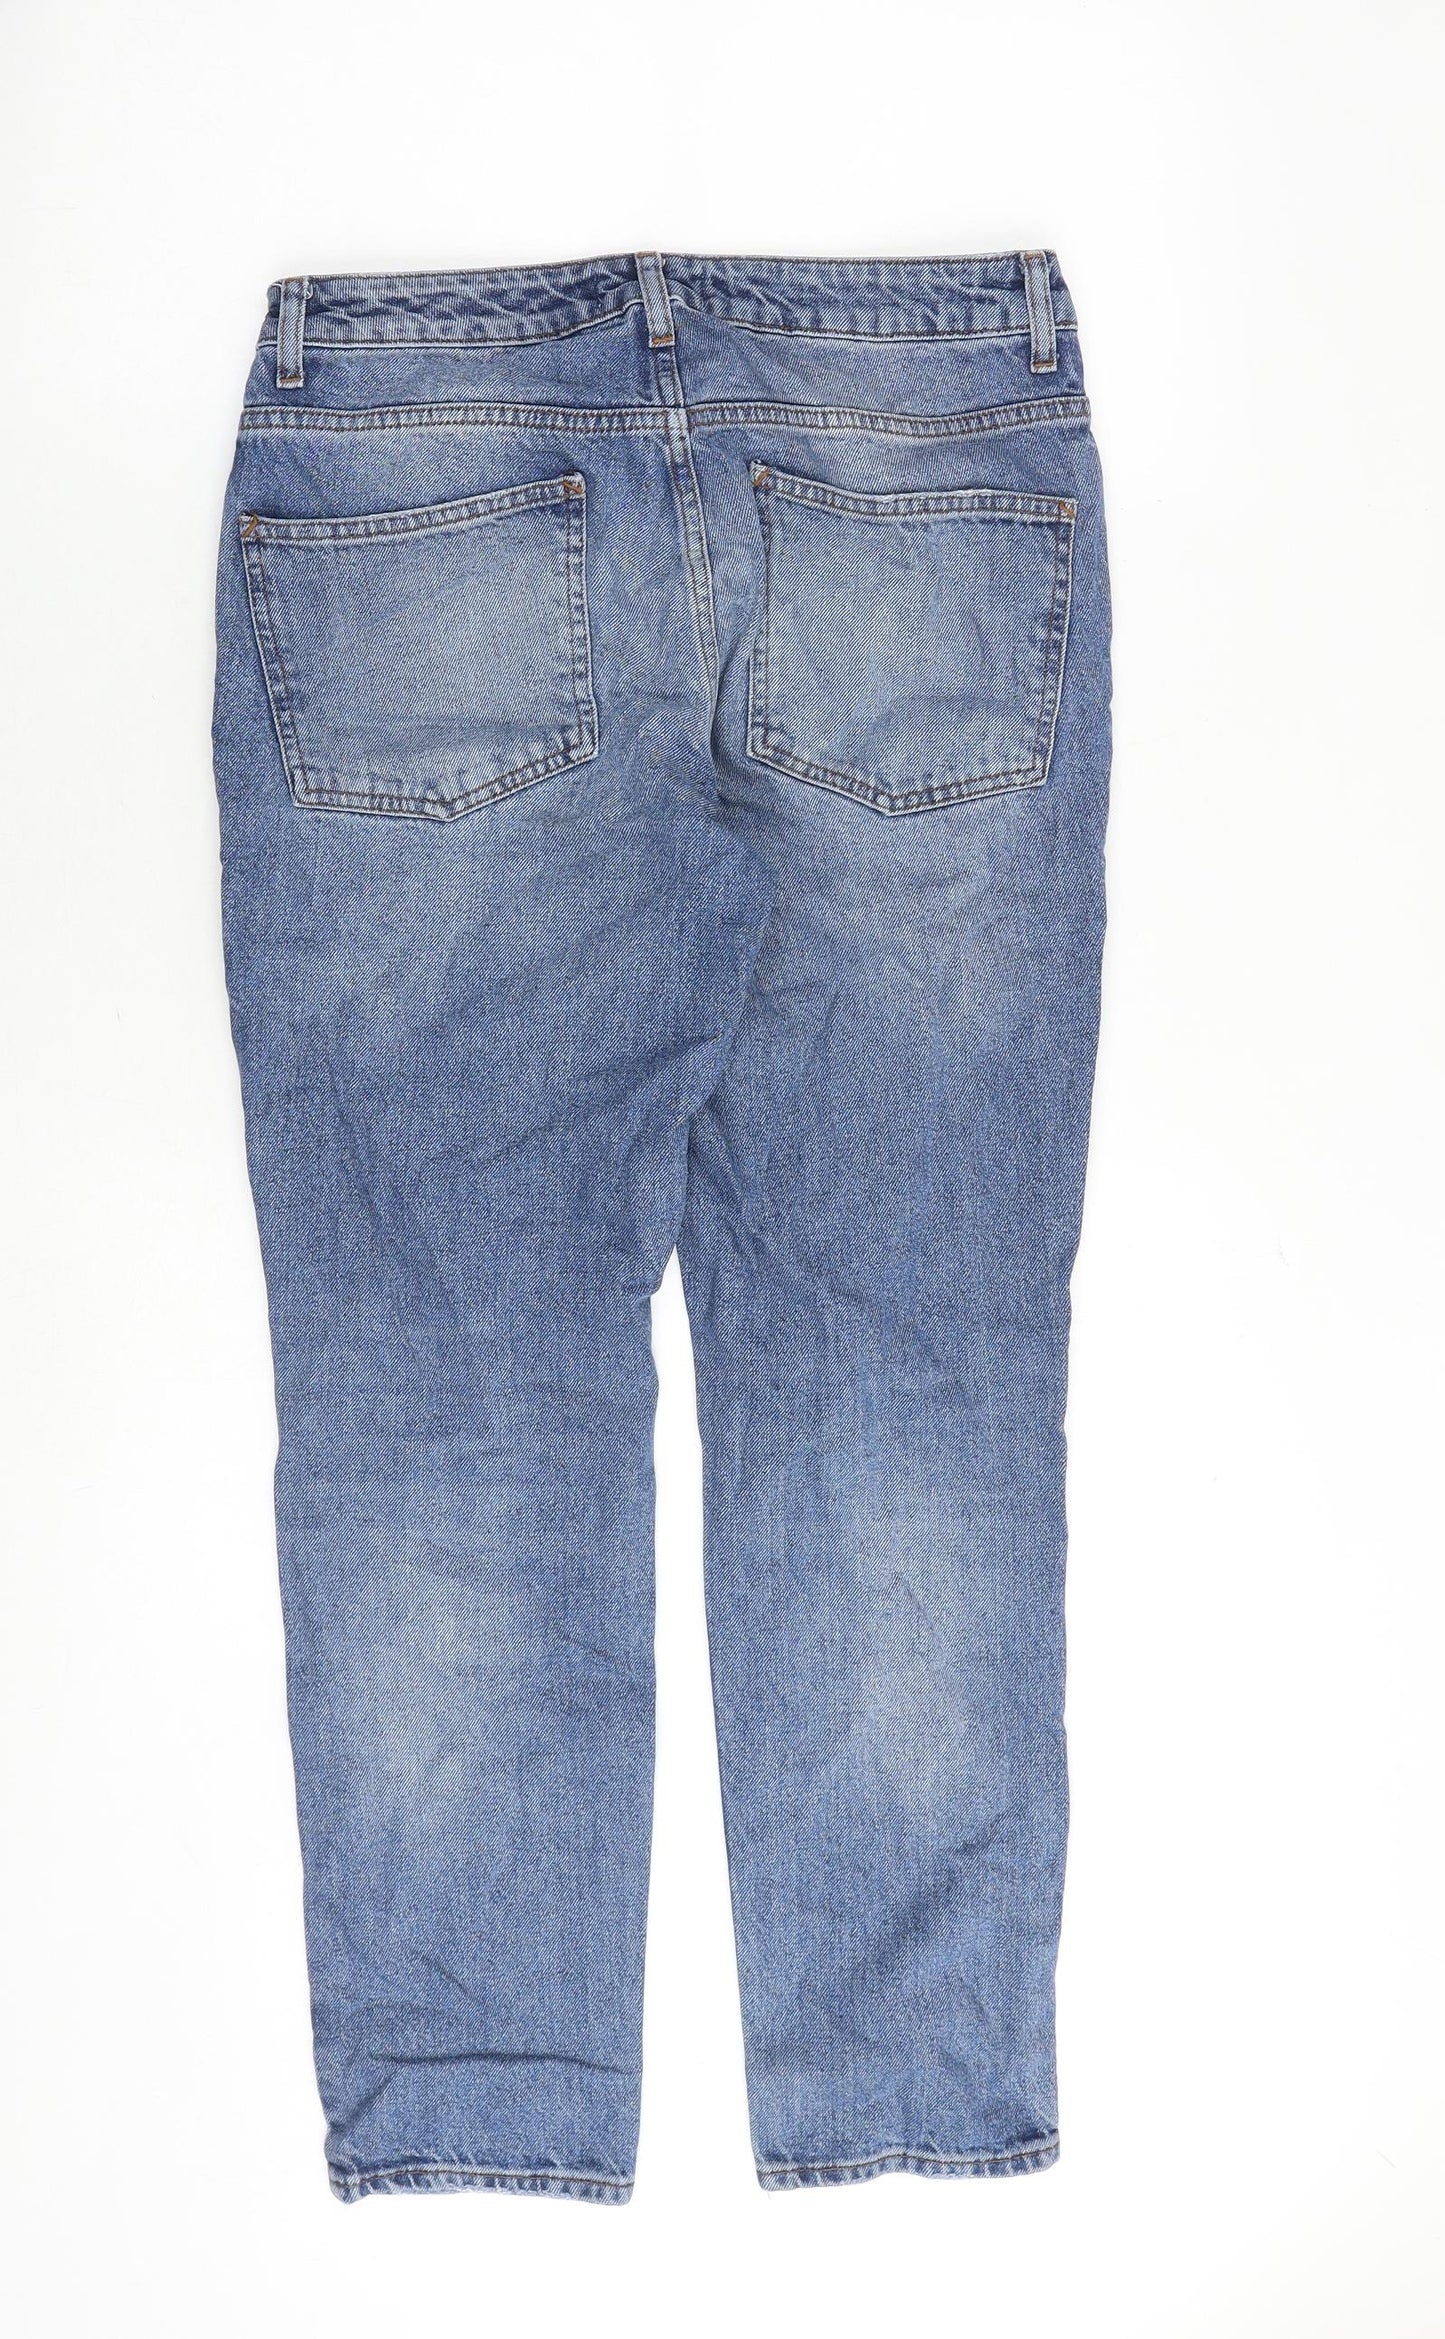 ASOS Mens Blue Cotton Skinny Jeans Size 30 in L30 in Regular Zip